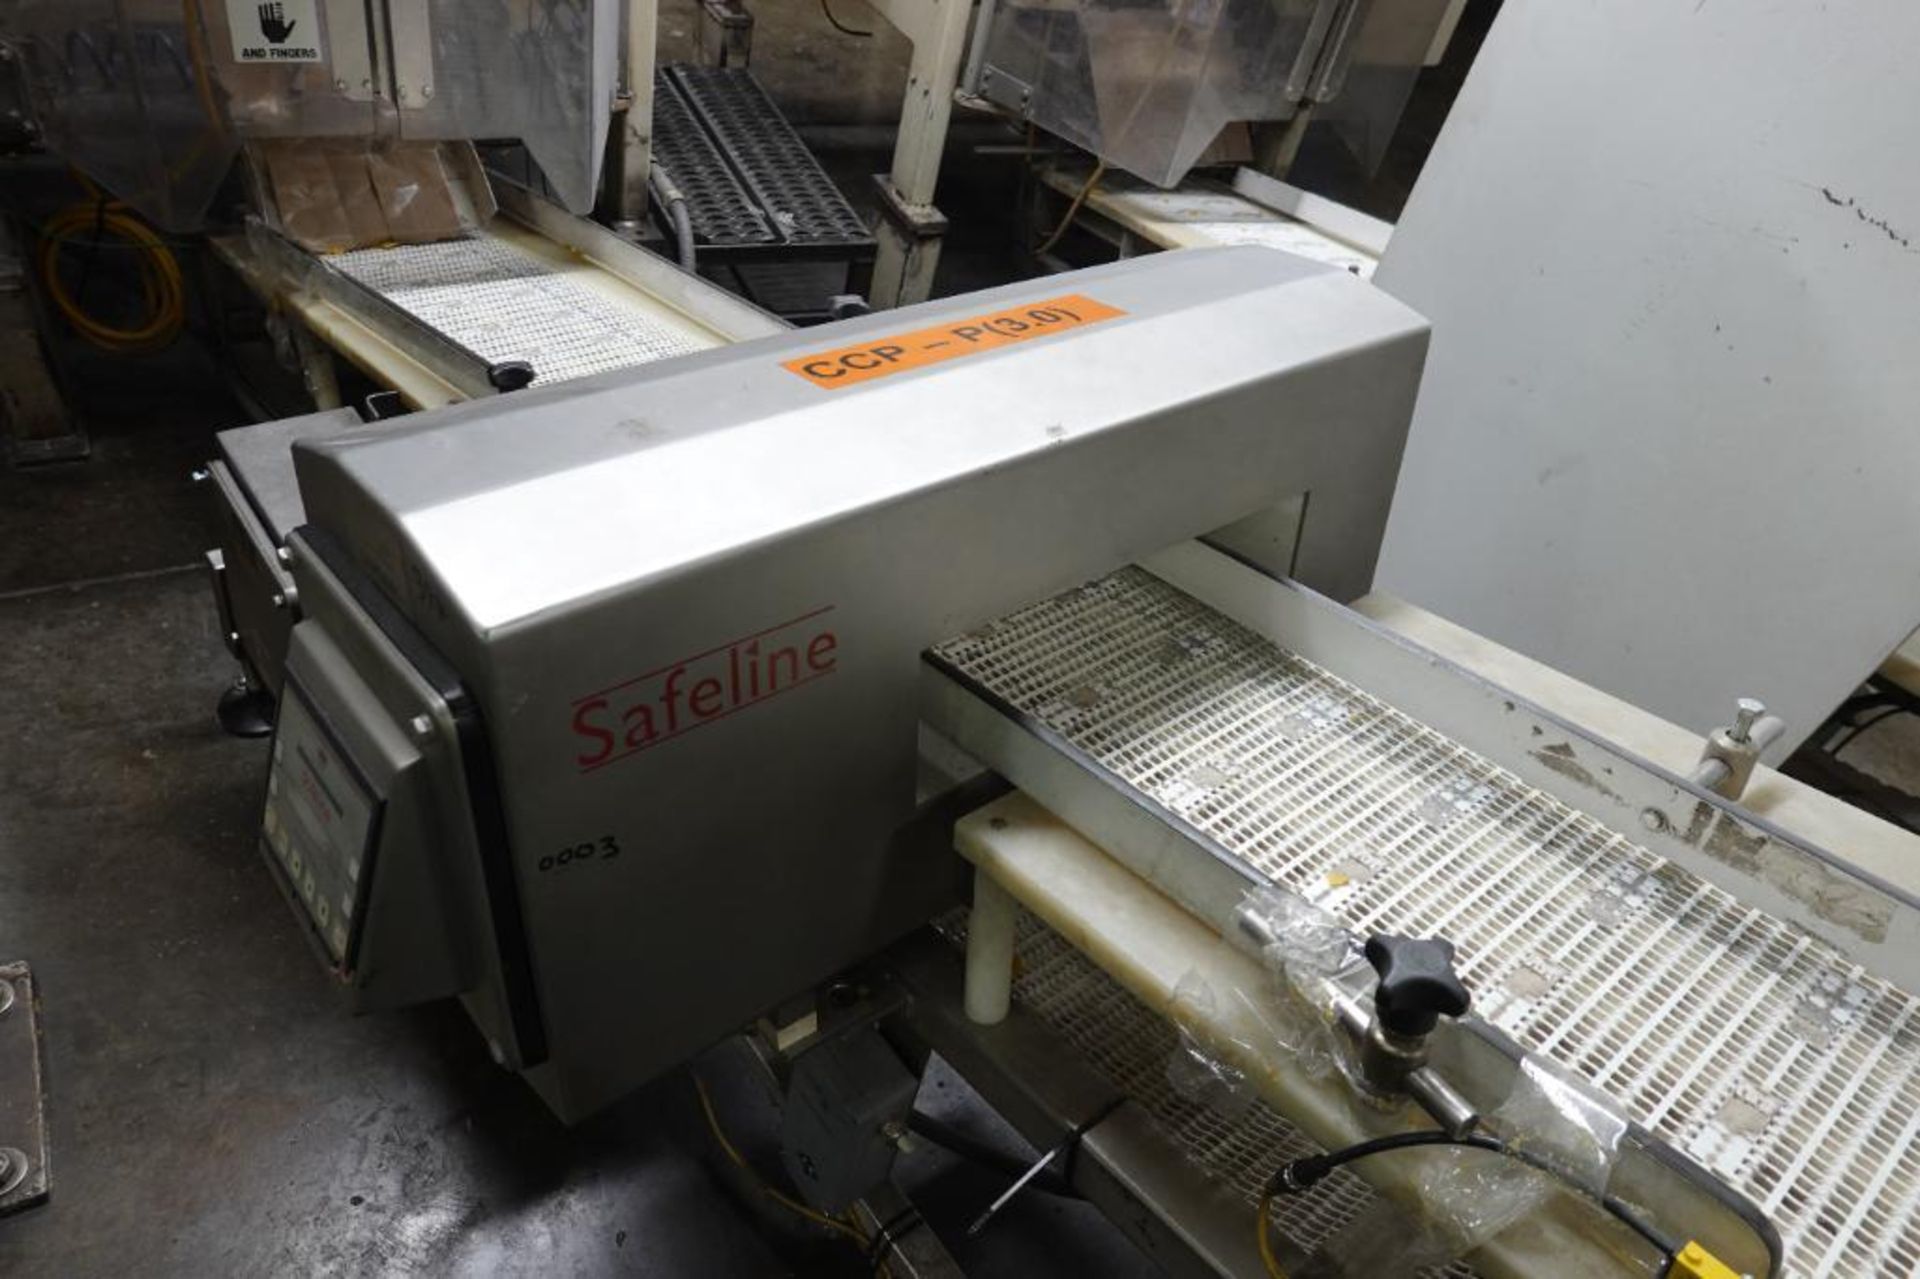 Safeline metal detector with incline conveyor - Image 2 of 8